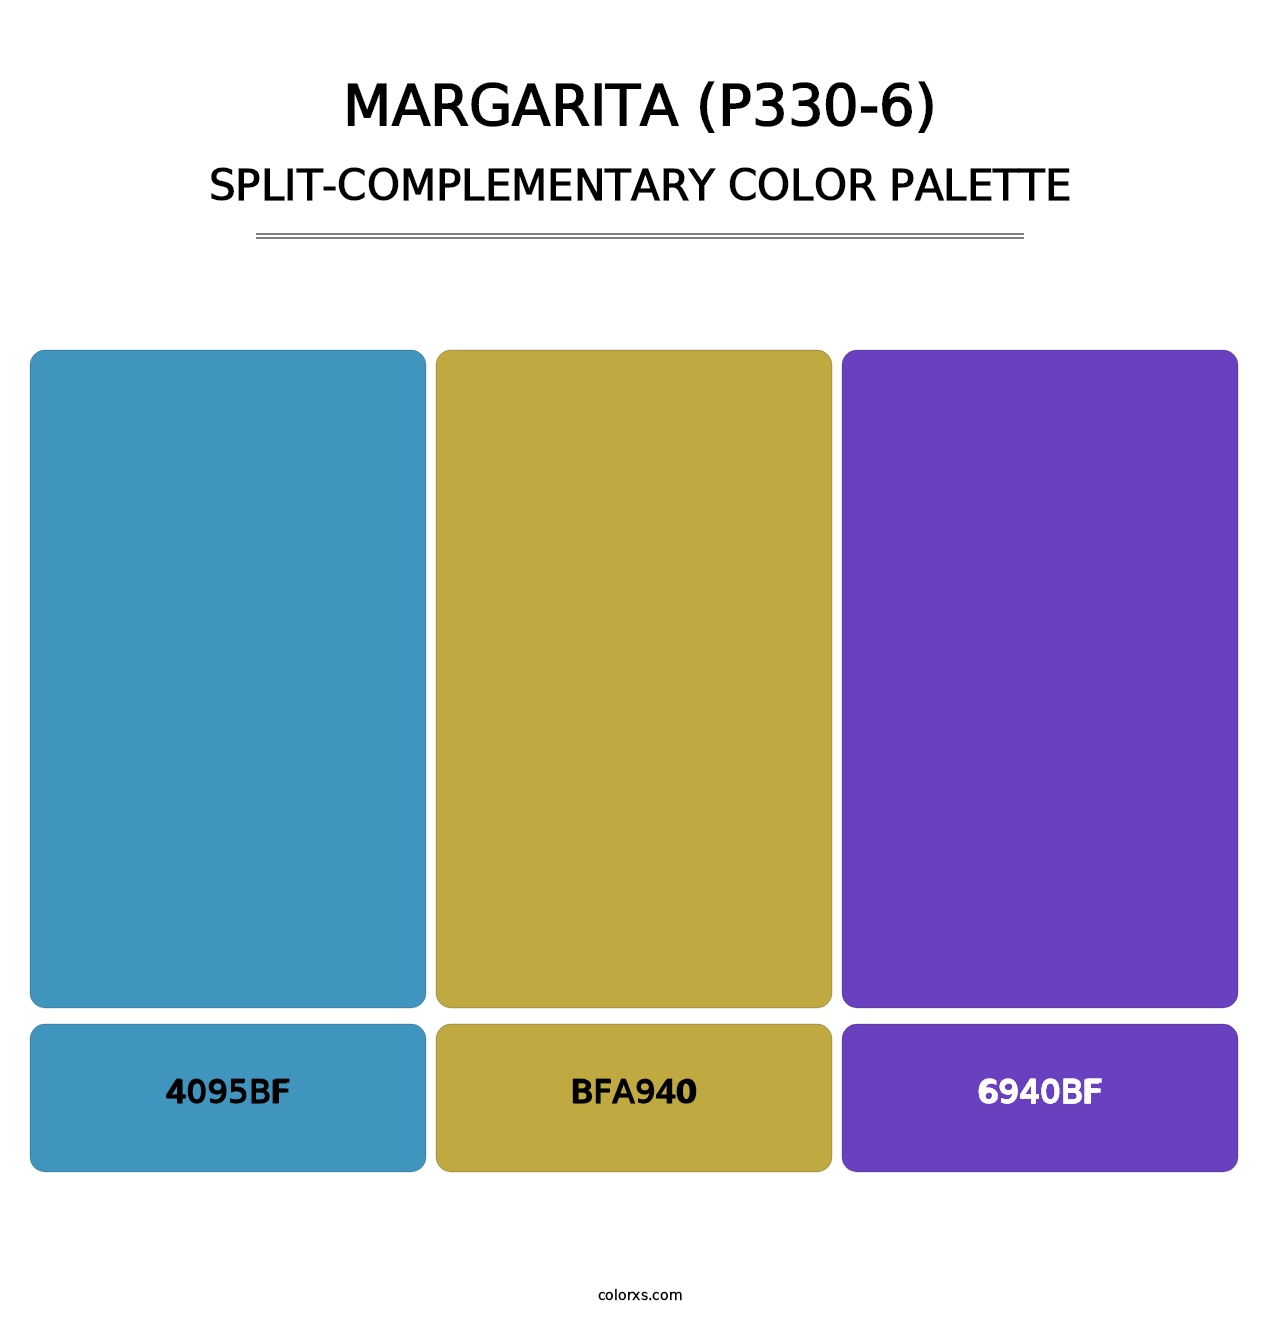 Margarita (P330-6) - Split-Complementary Color Palette